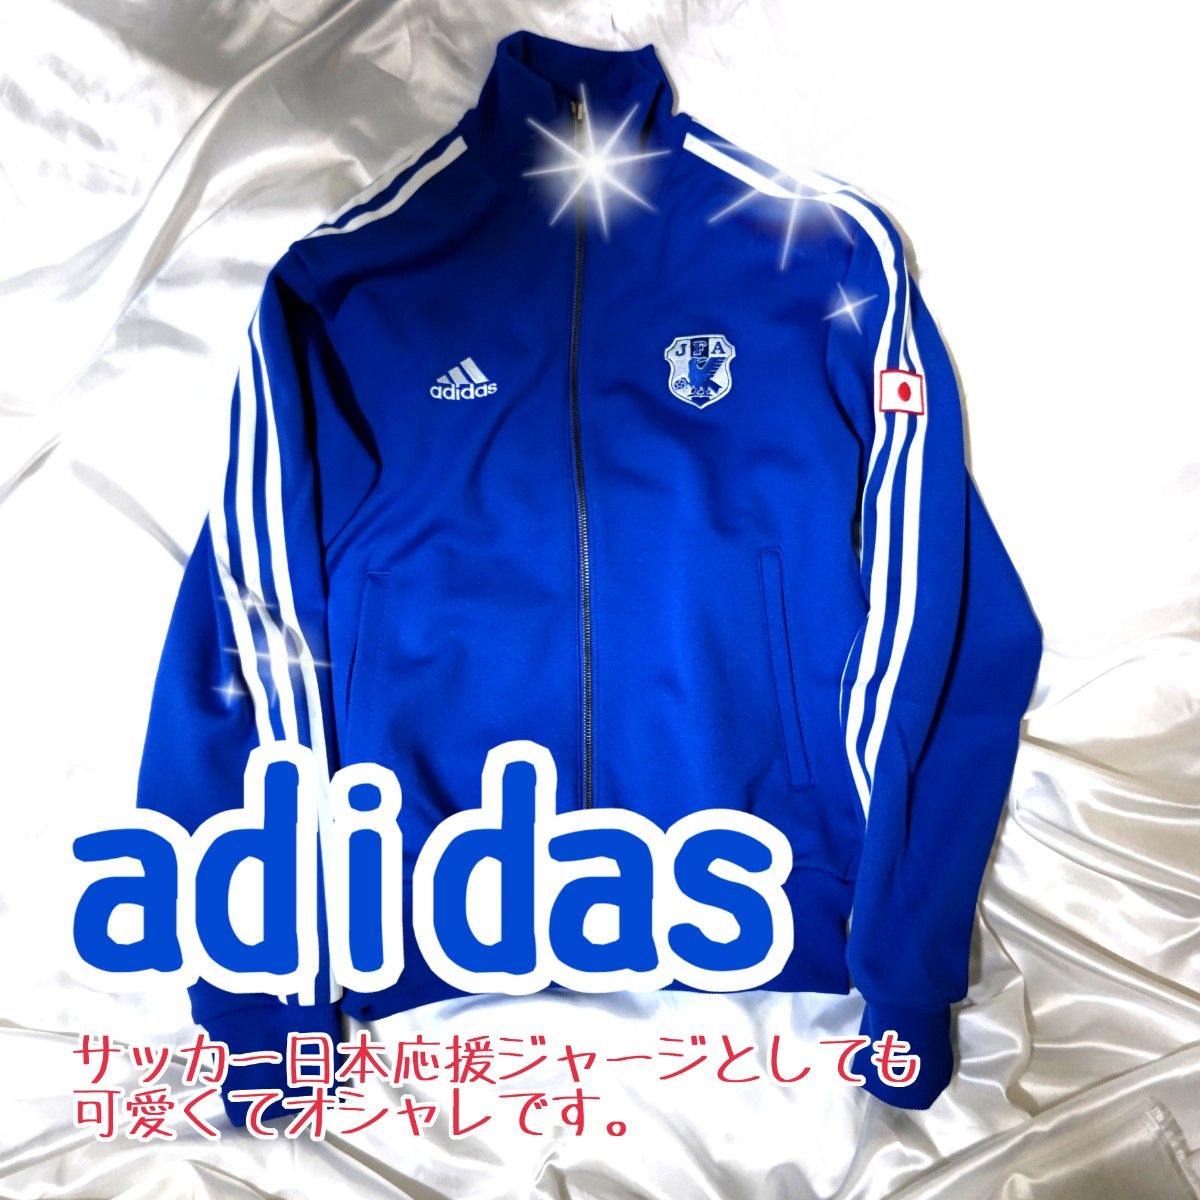 adidas】日本代表応援したいジャージ サッカー、フットサル サポーター